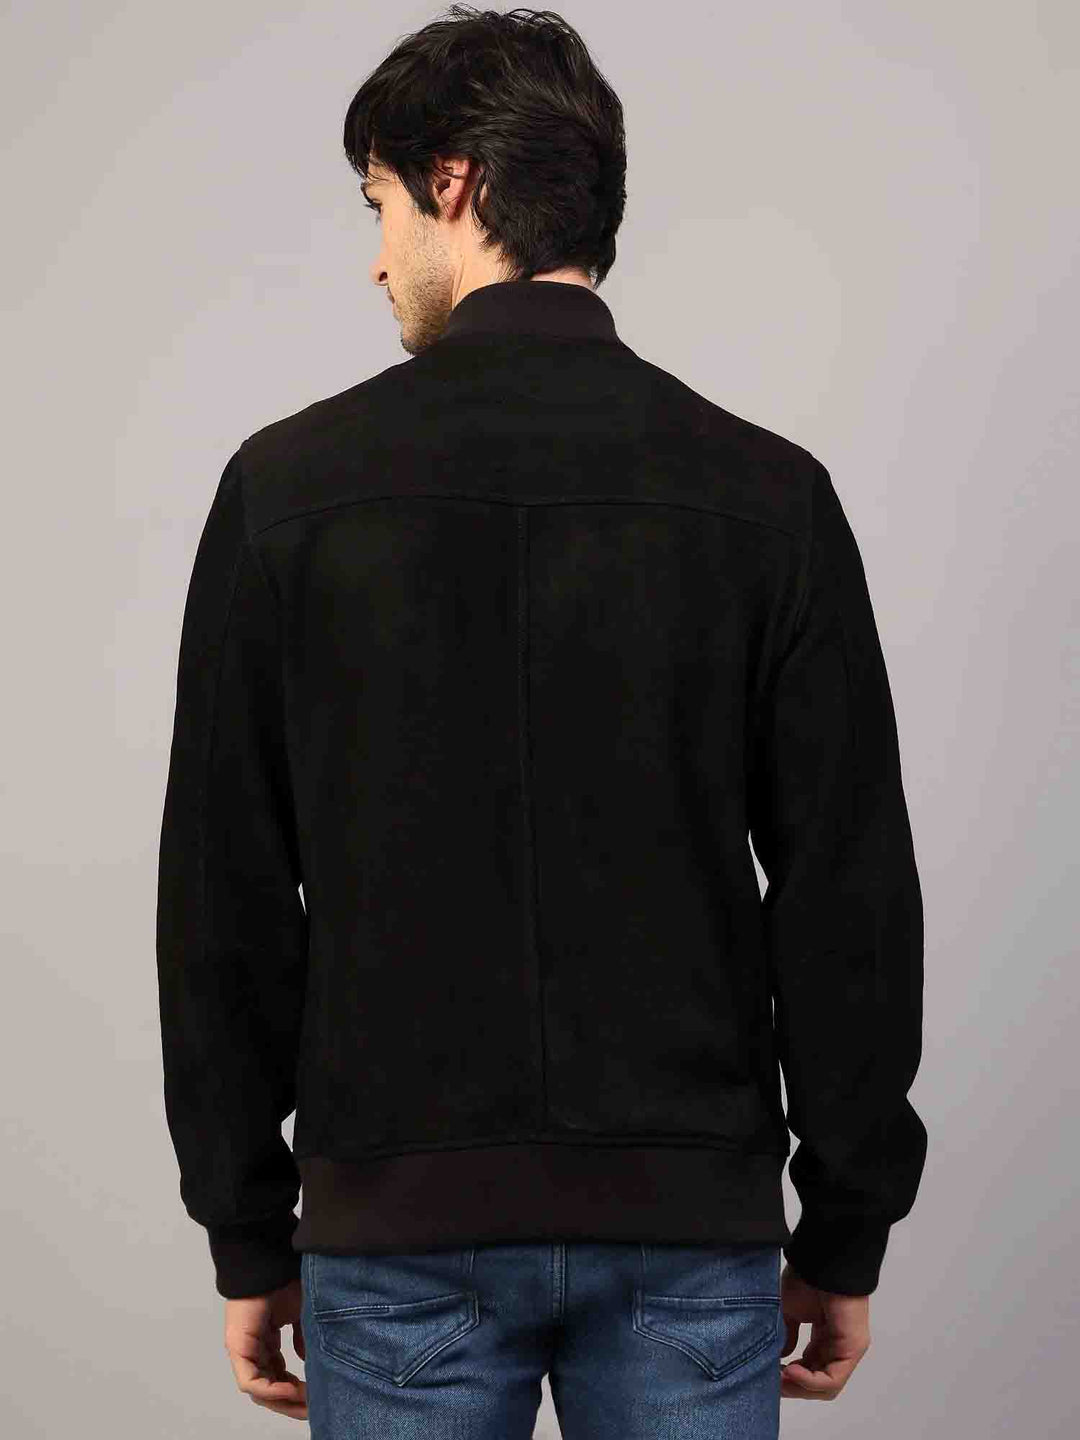 Saint Luca Black Leather Men's Bomber Jacket